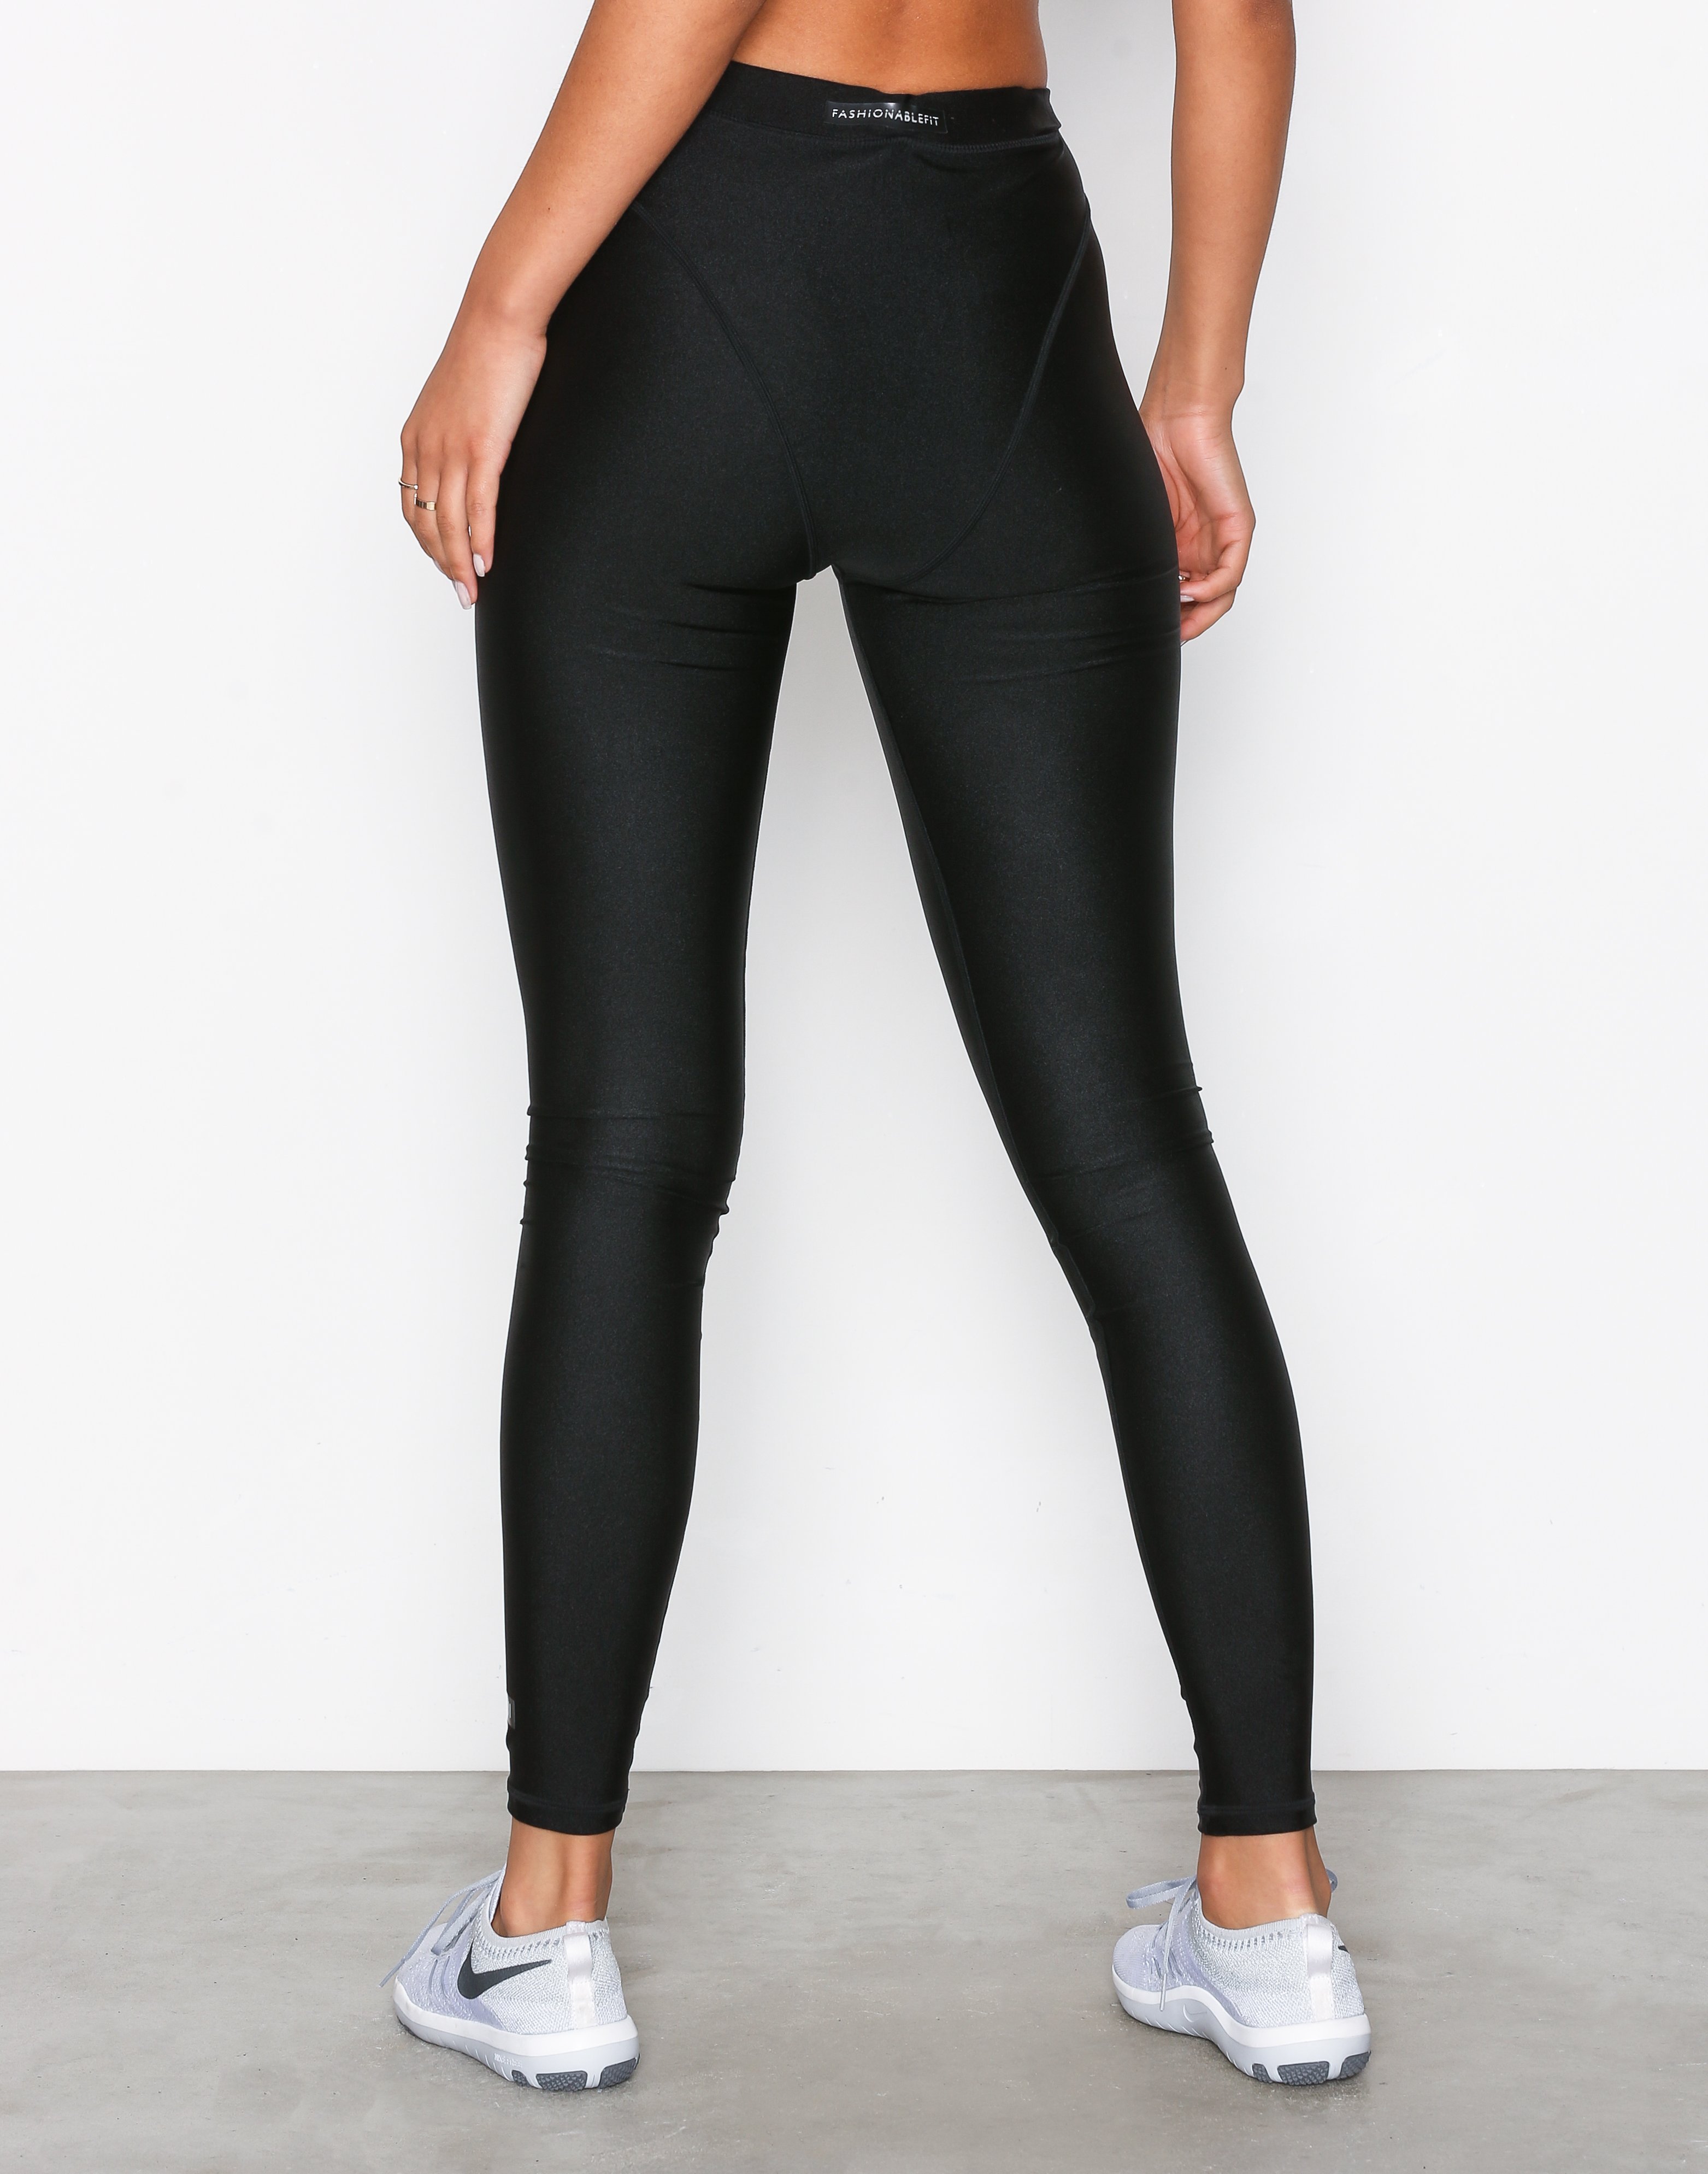 Shiny High Cut Tights - Fashionablefit - Black - Tights & Pants (Sports ...